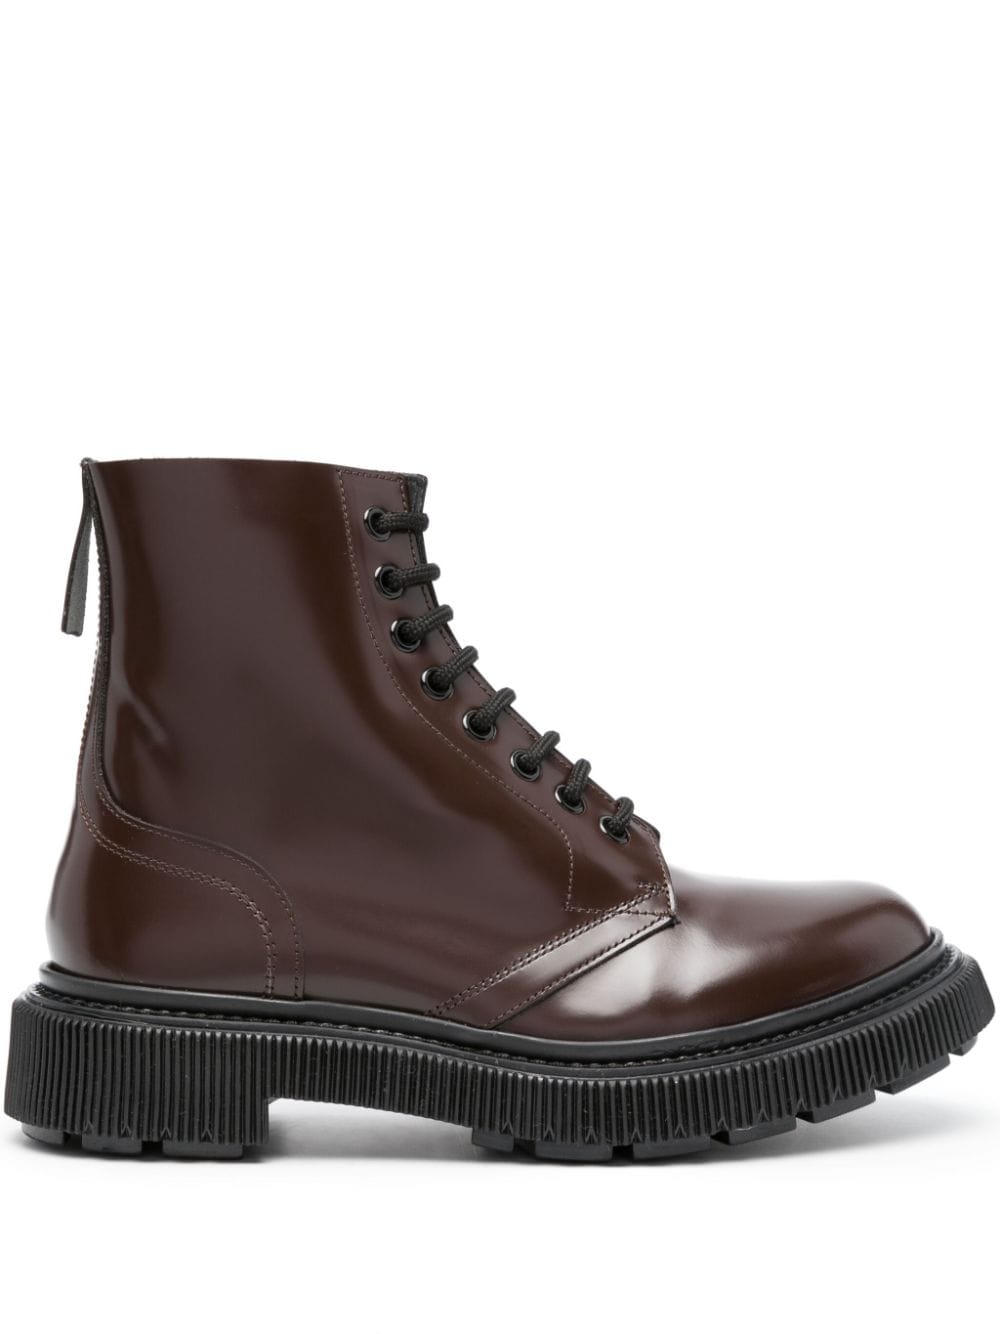 Adieu Paris Type 165 leather boots - Brown von Adieu Paris